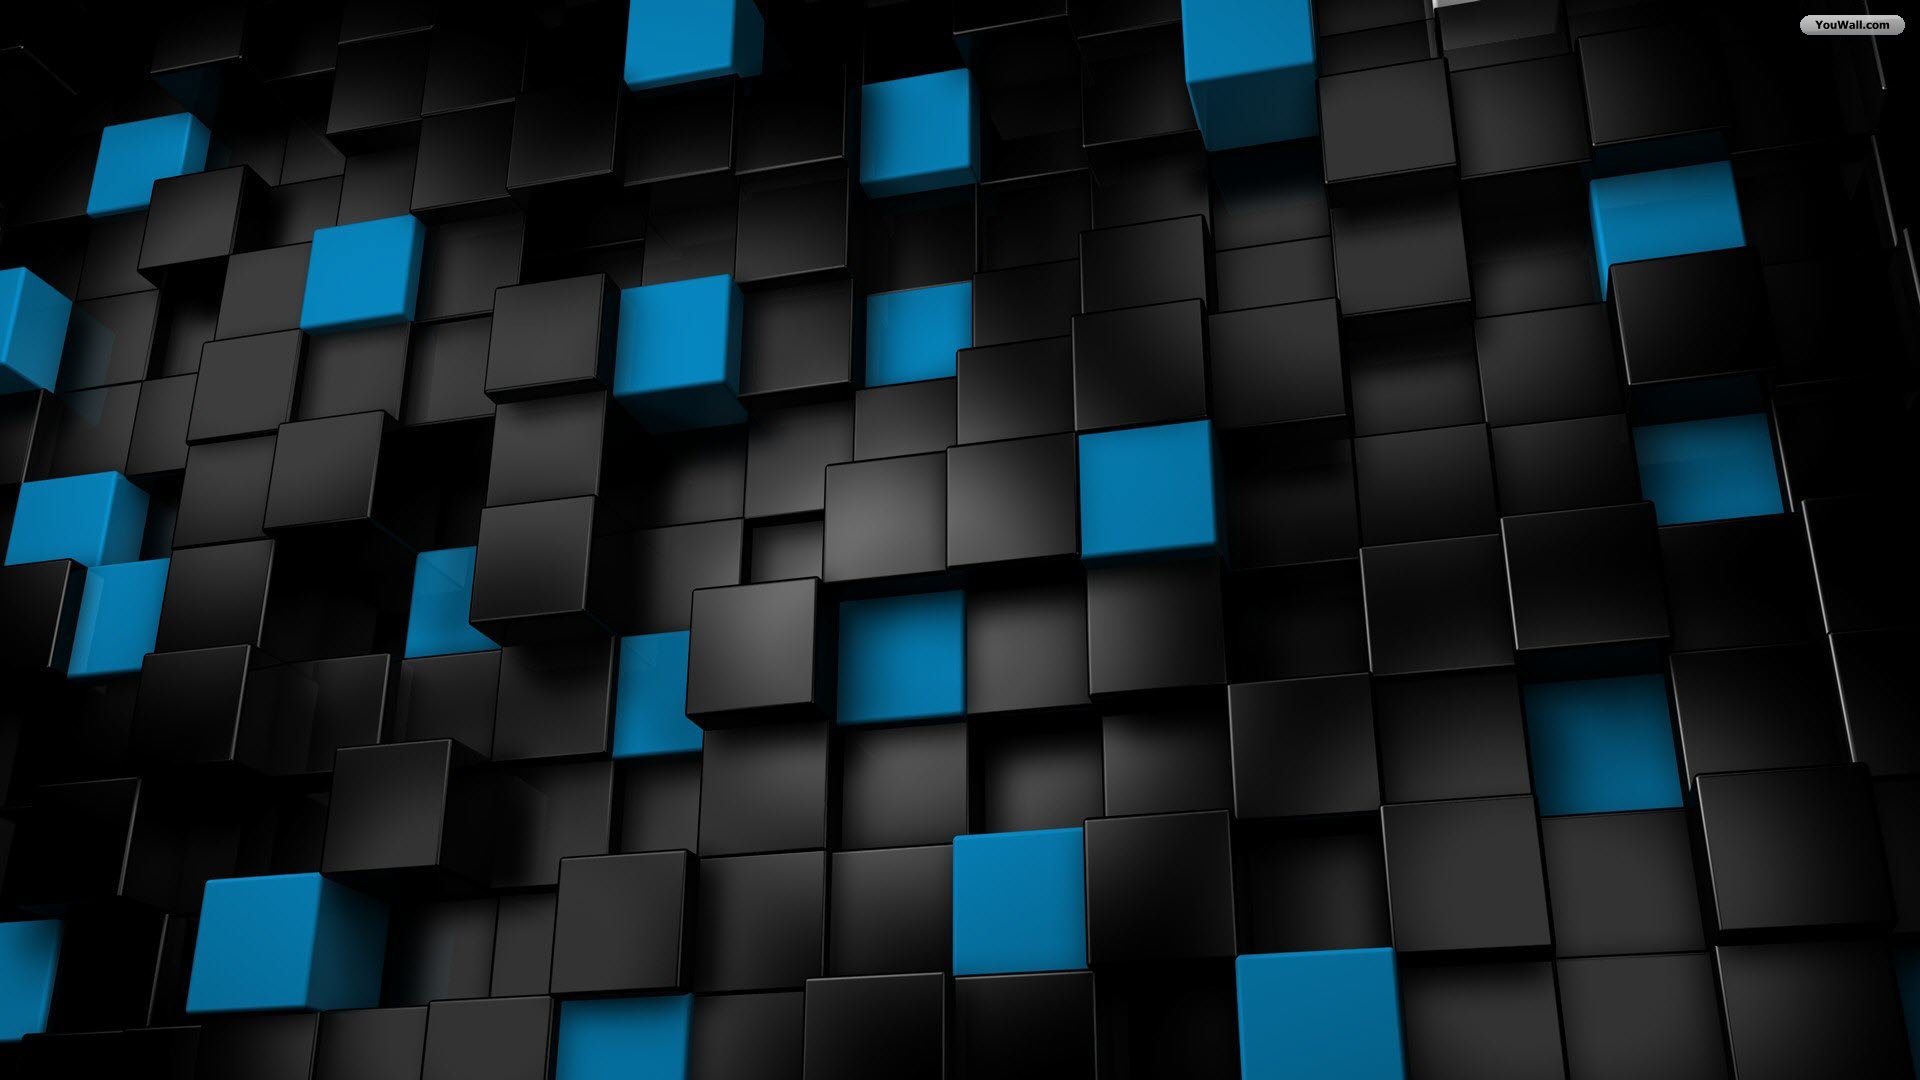 black and blue cubes desktop wallpaper download black and blue cubes